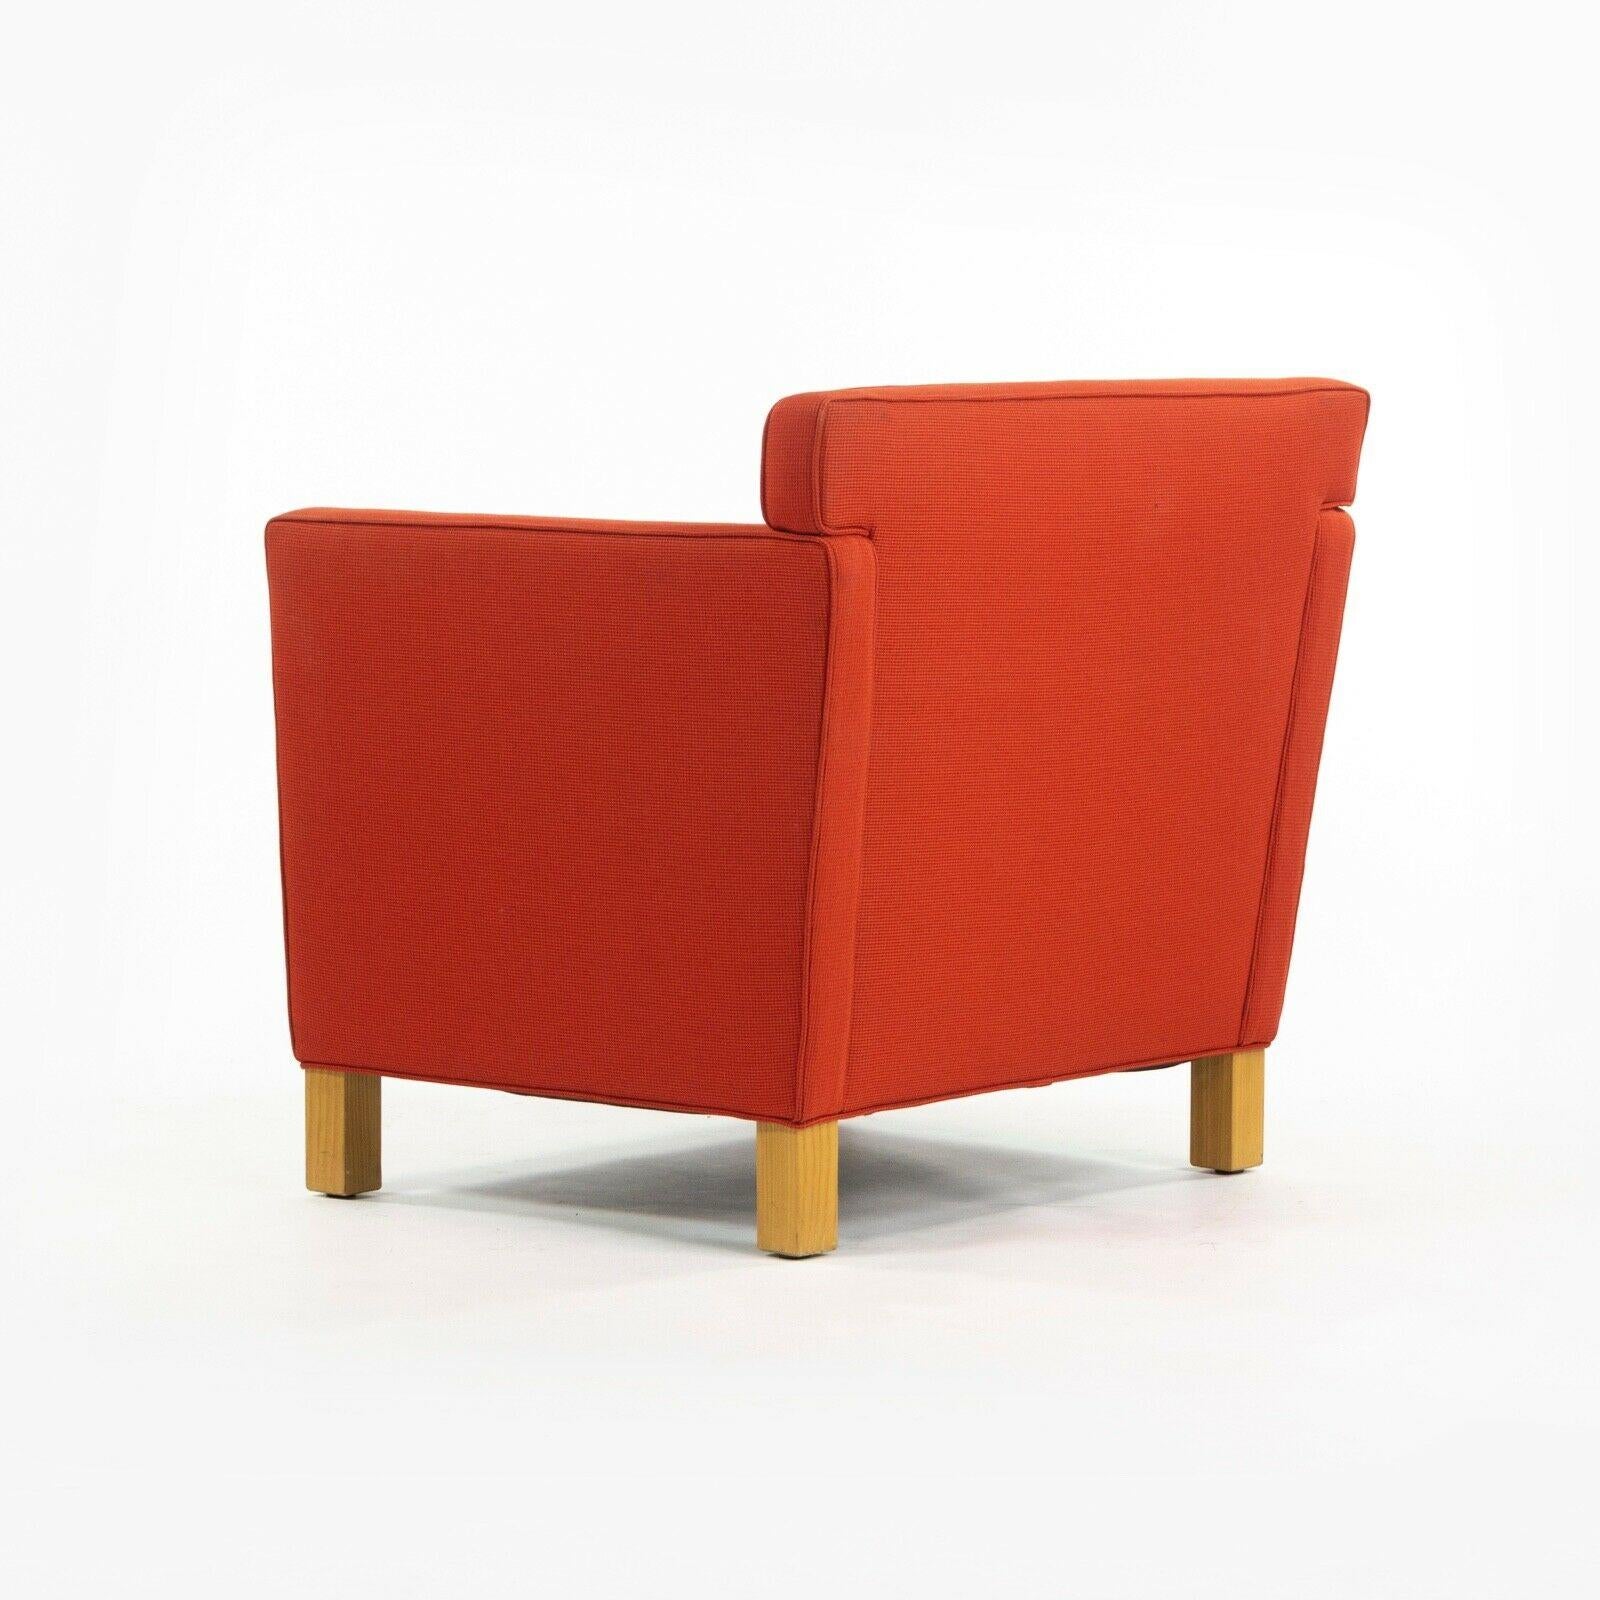 Contemporary 2010s Pair Original Knoll Mies Van Der Rohe Krefeld Lounge Chair Orange Fabric